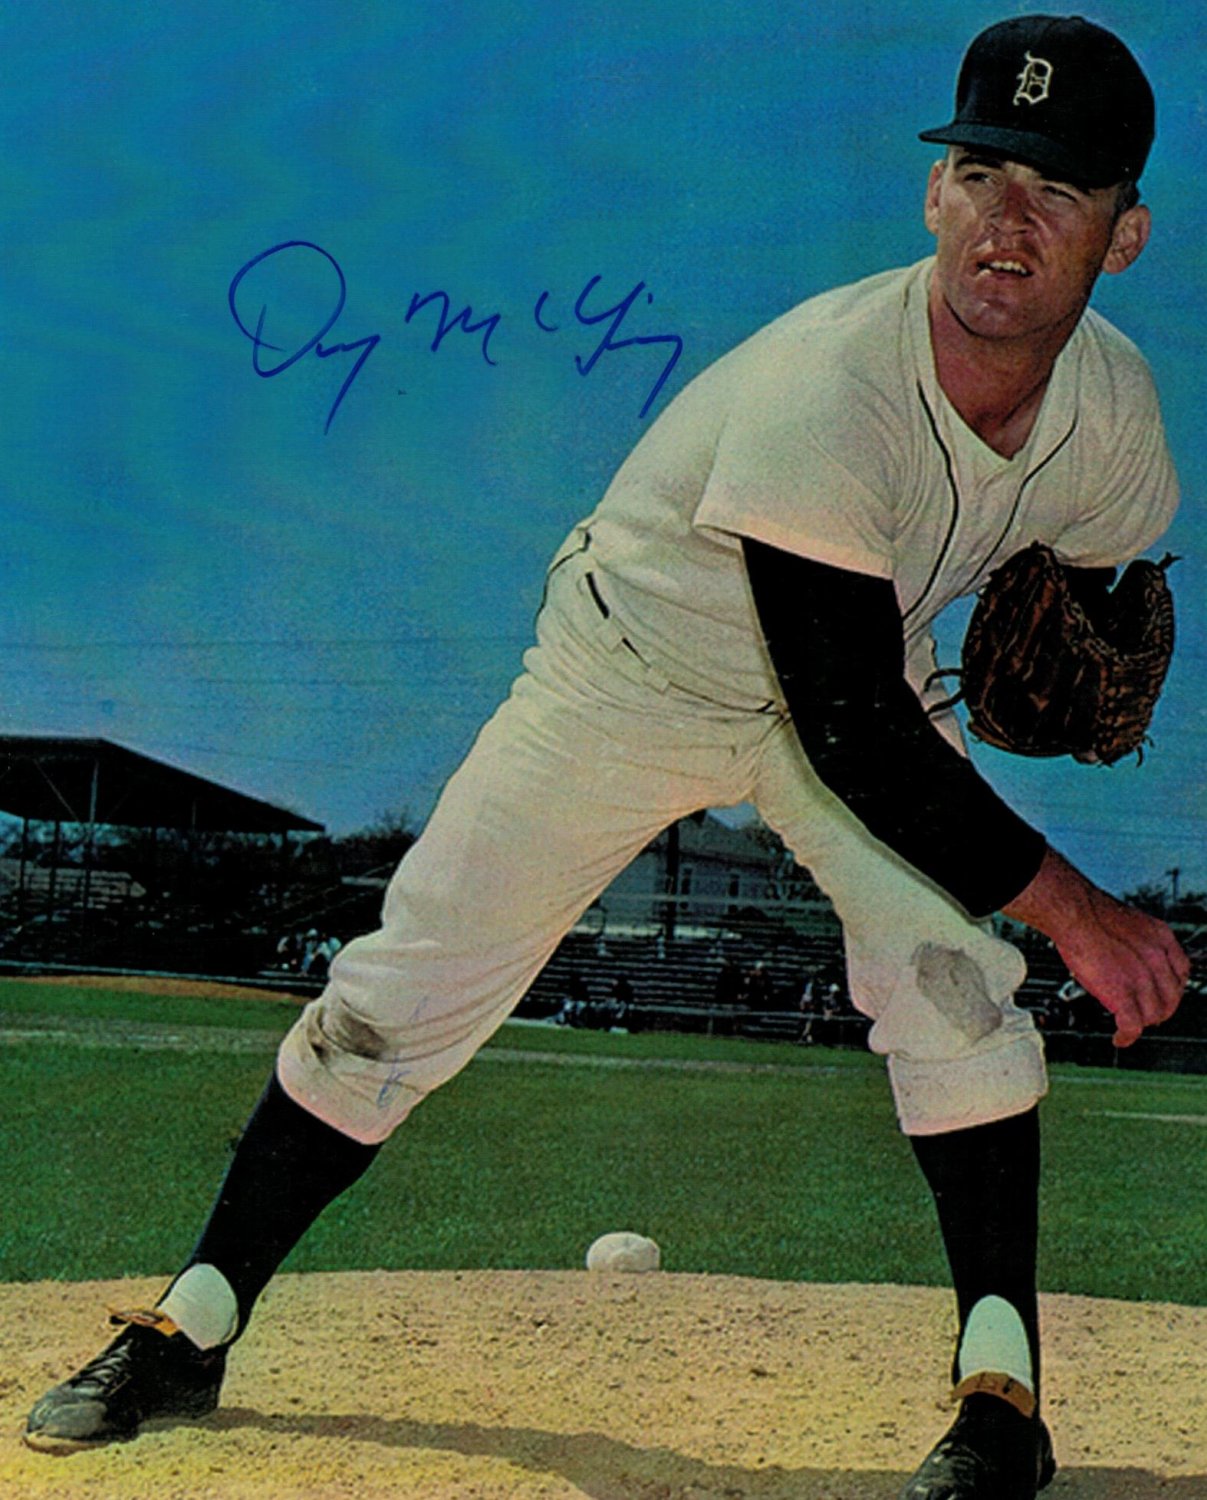 Denny Mclain autographed Detroit Tigers baseball Jersey